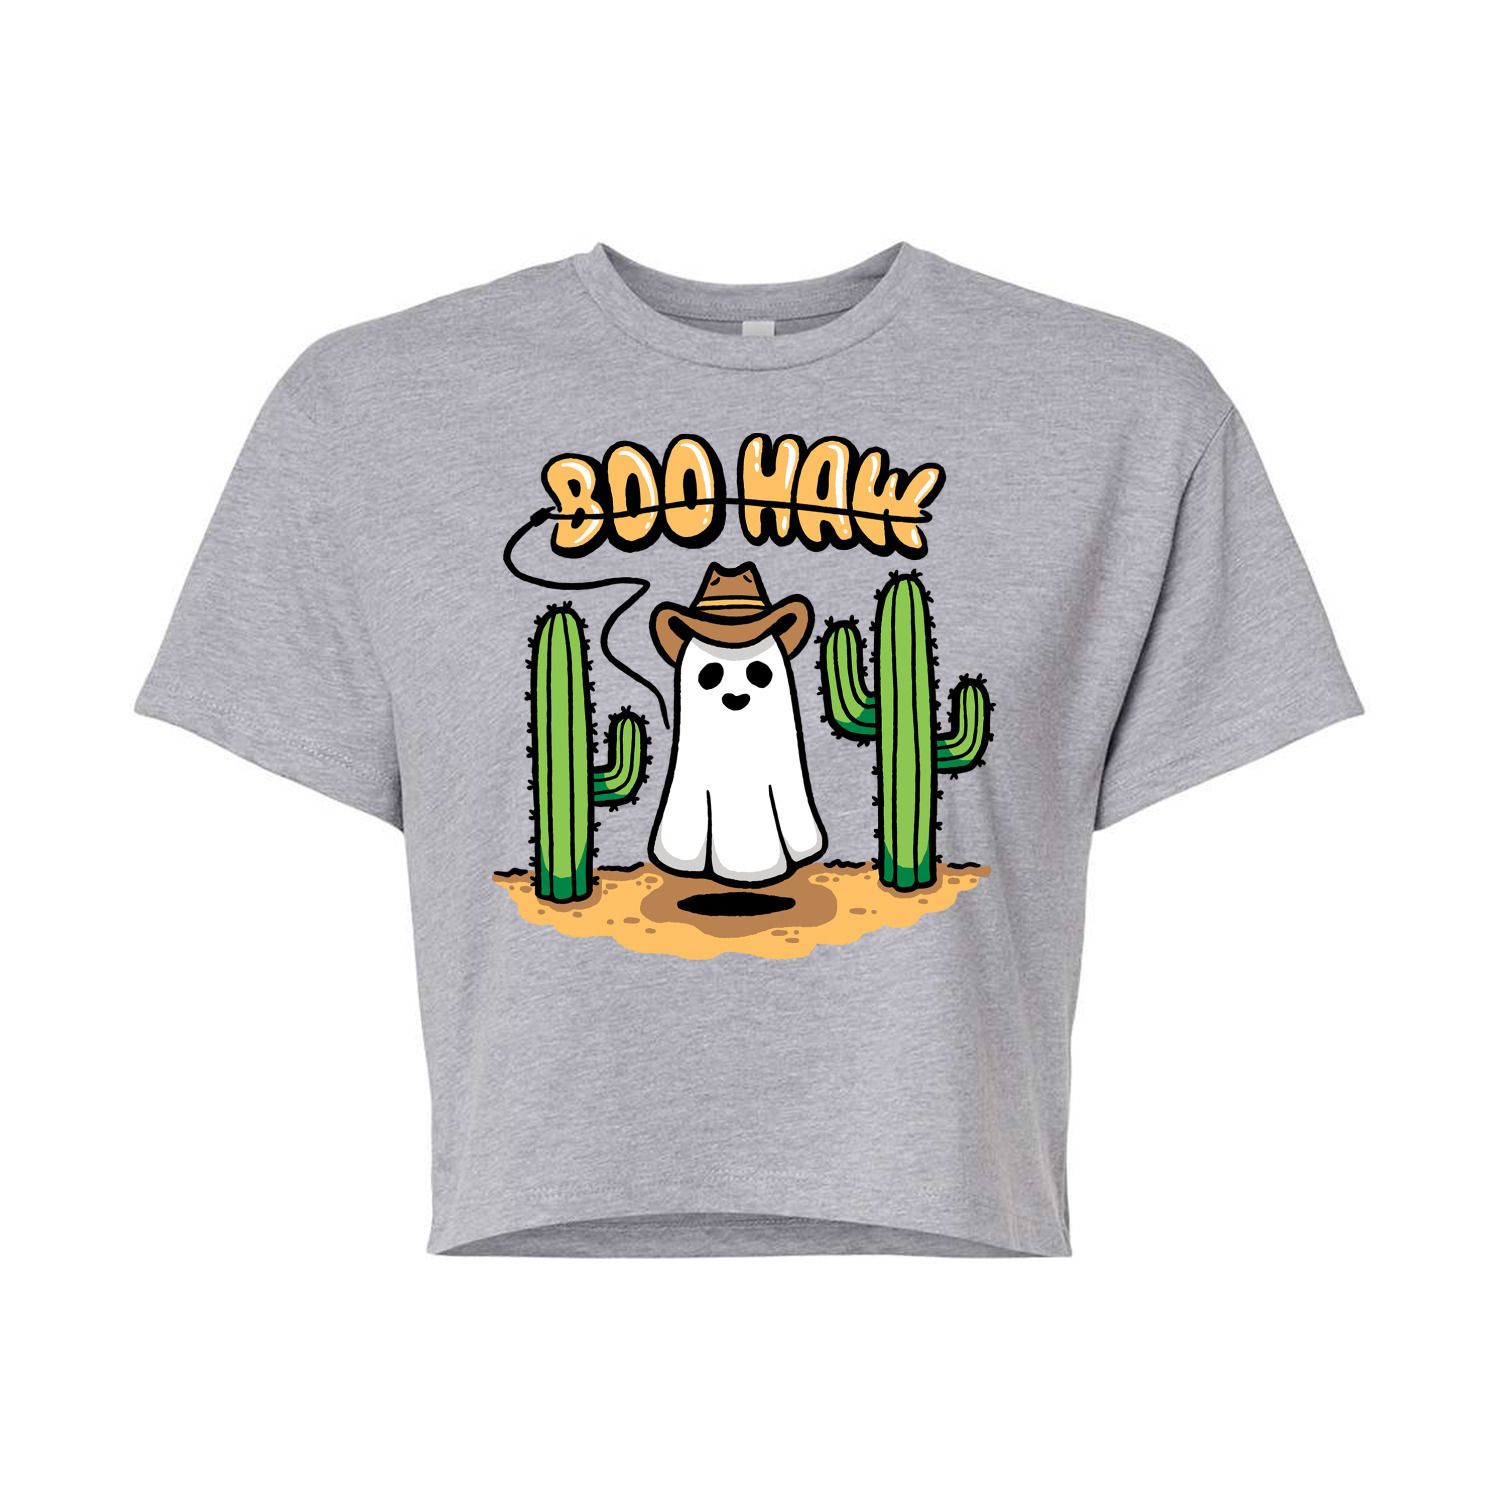 Укороченная футболка для юниоров Boo Haw Licensed Character